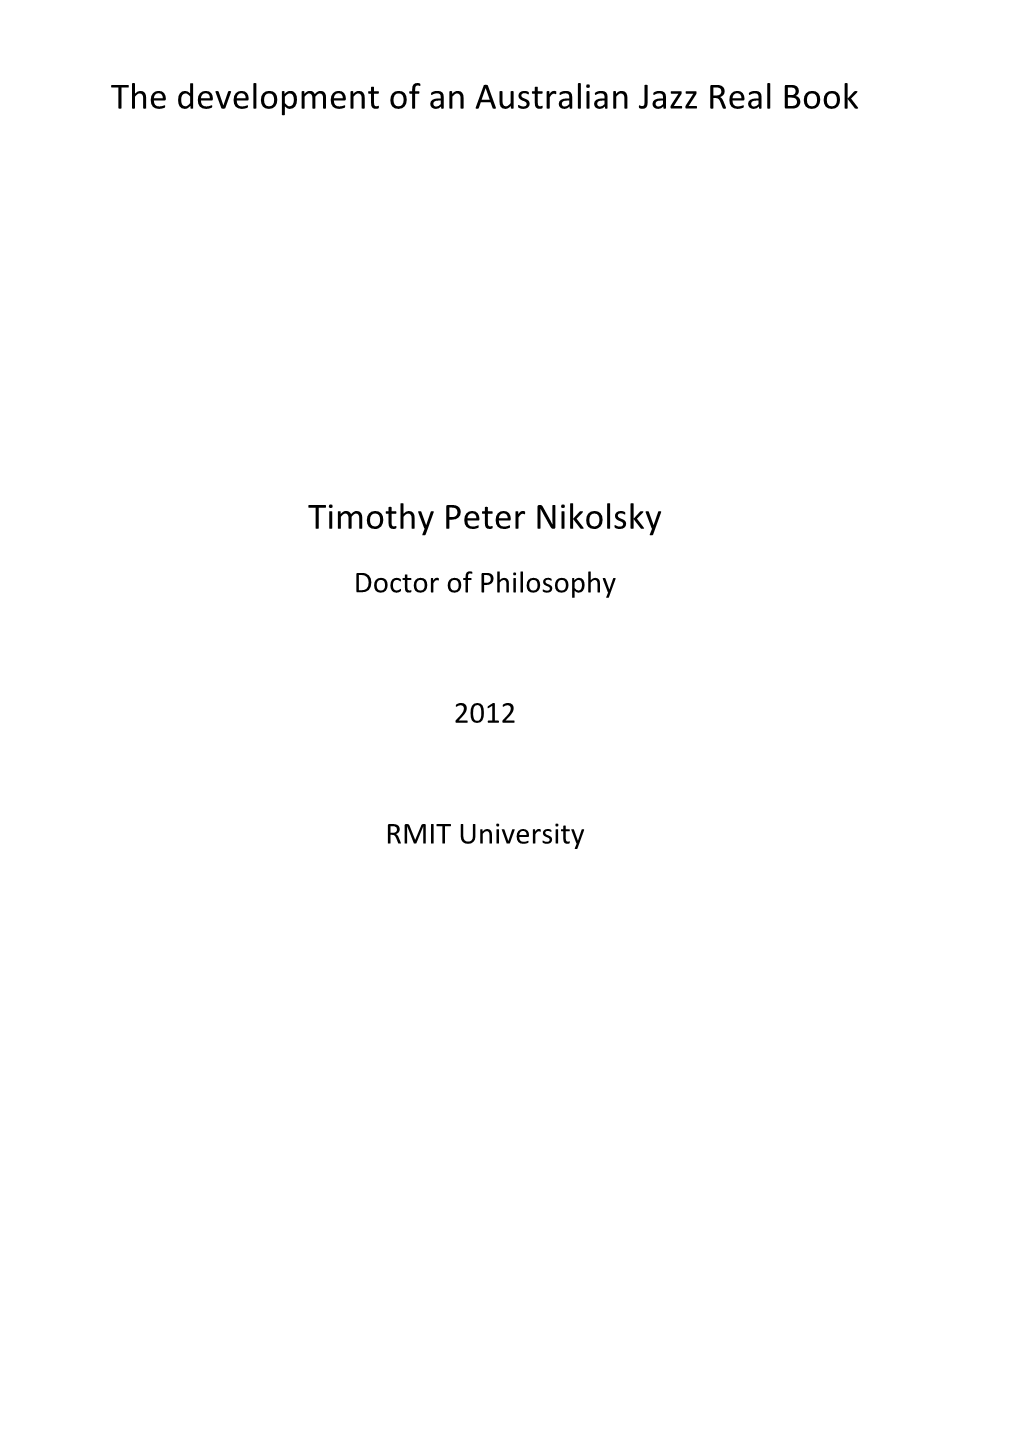 The Development of an Australian Jazz Real Book Timothy Peter